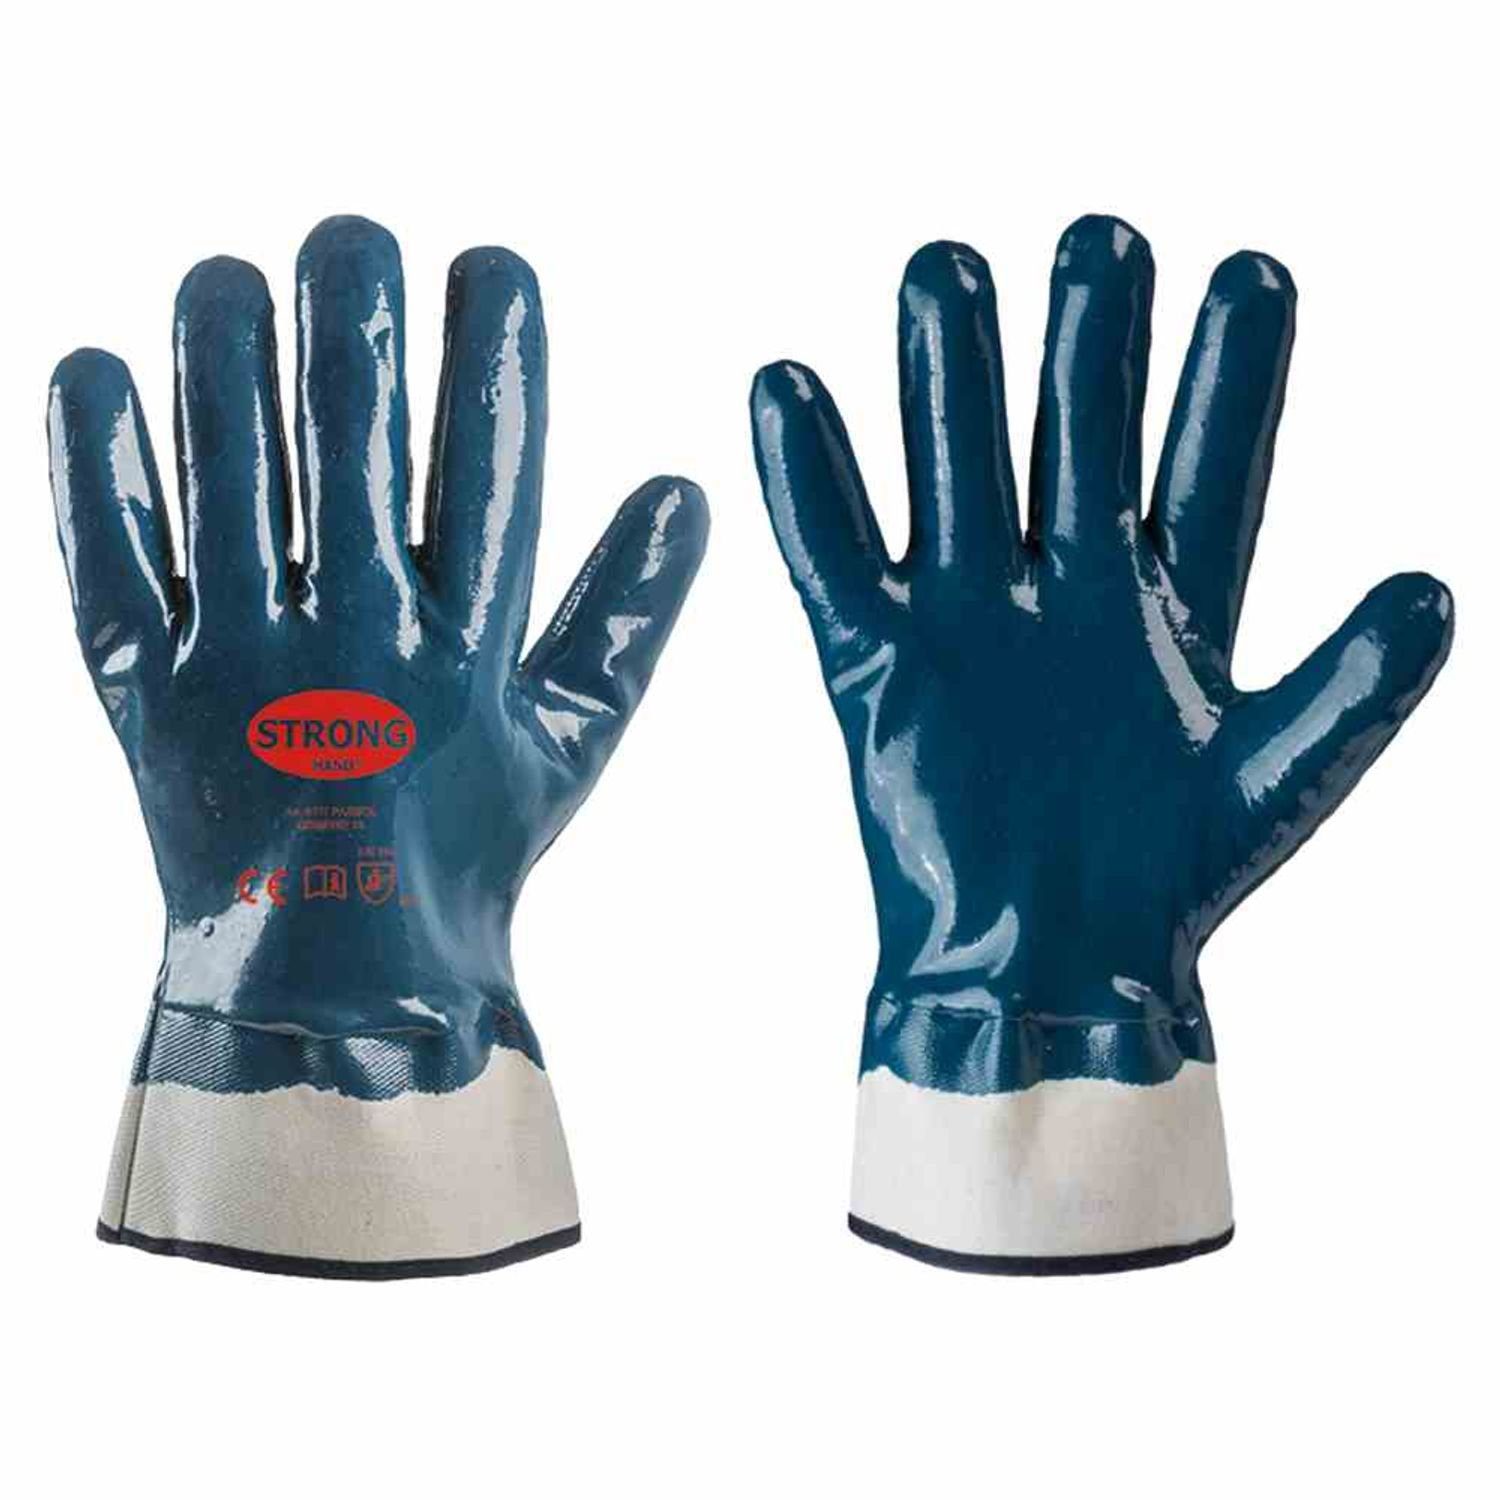 Feldtmann Nitril-Handschuhe Handschuh Nitril Pazifik, Größe 11